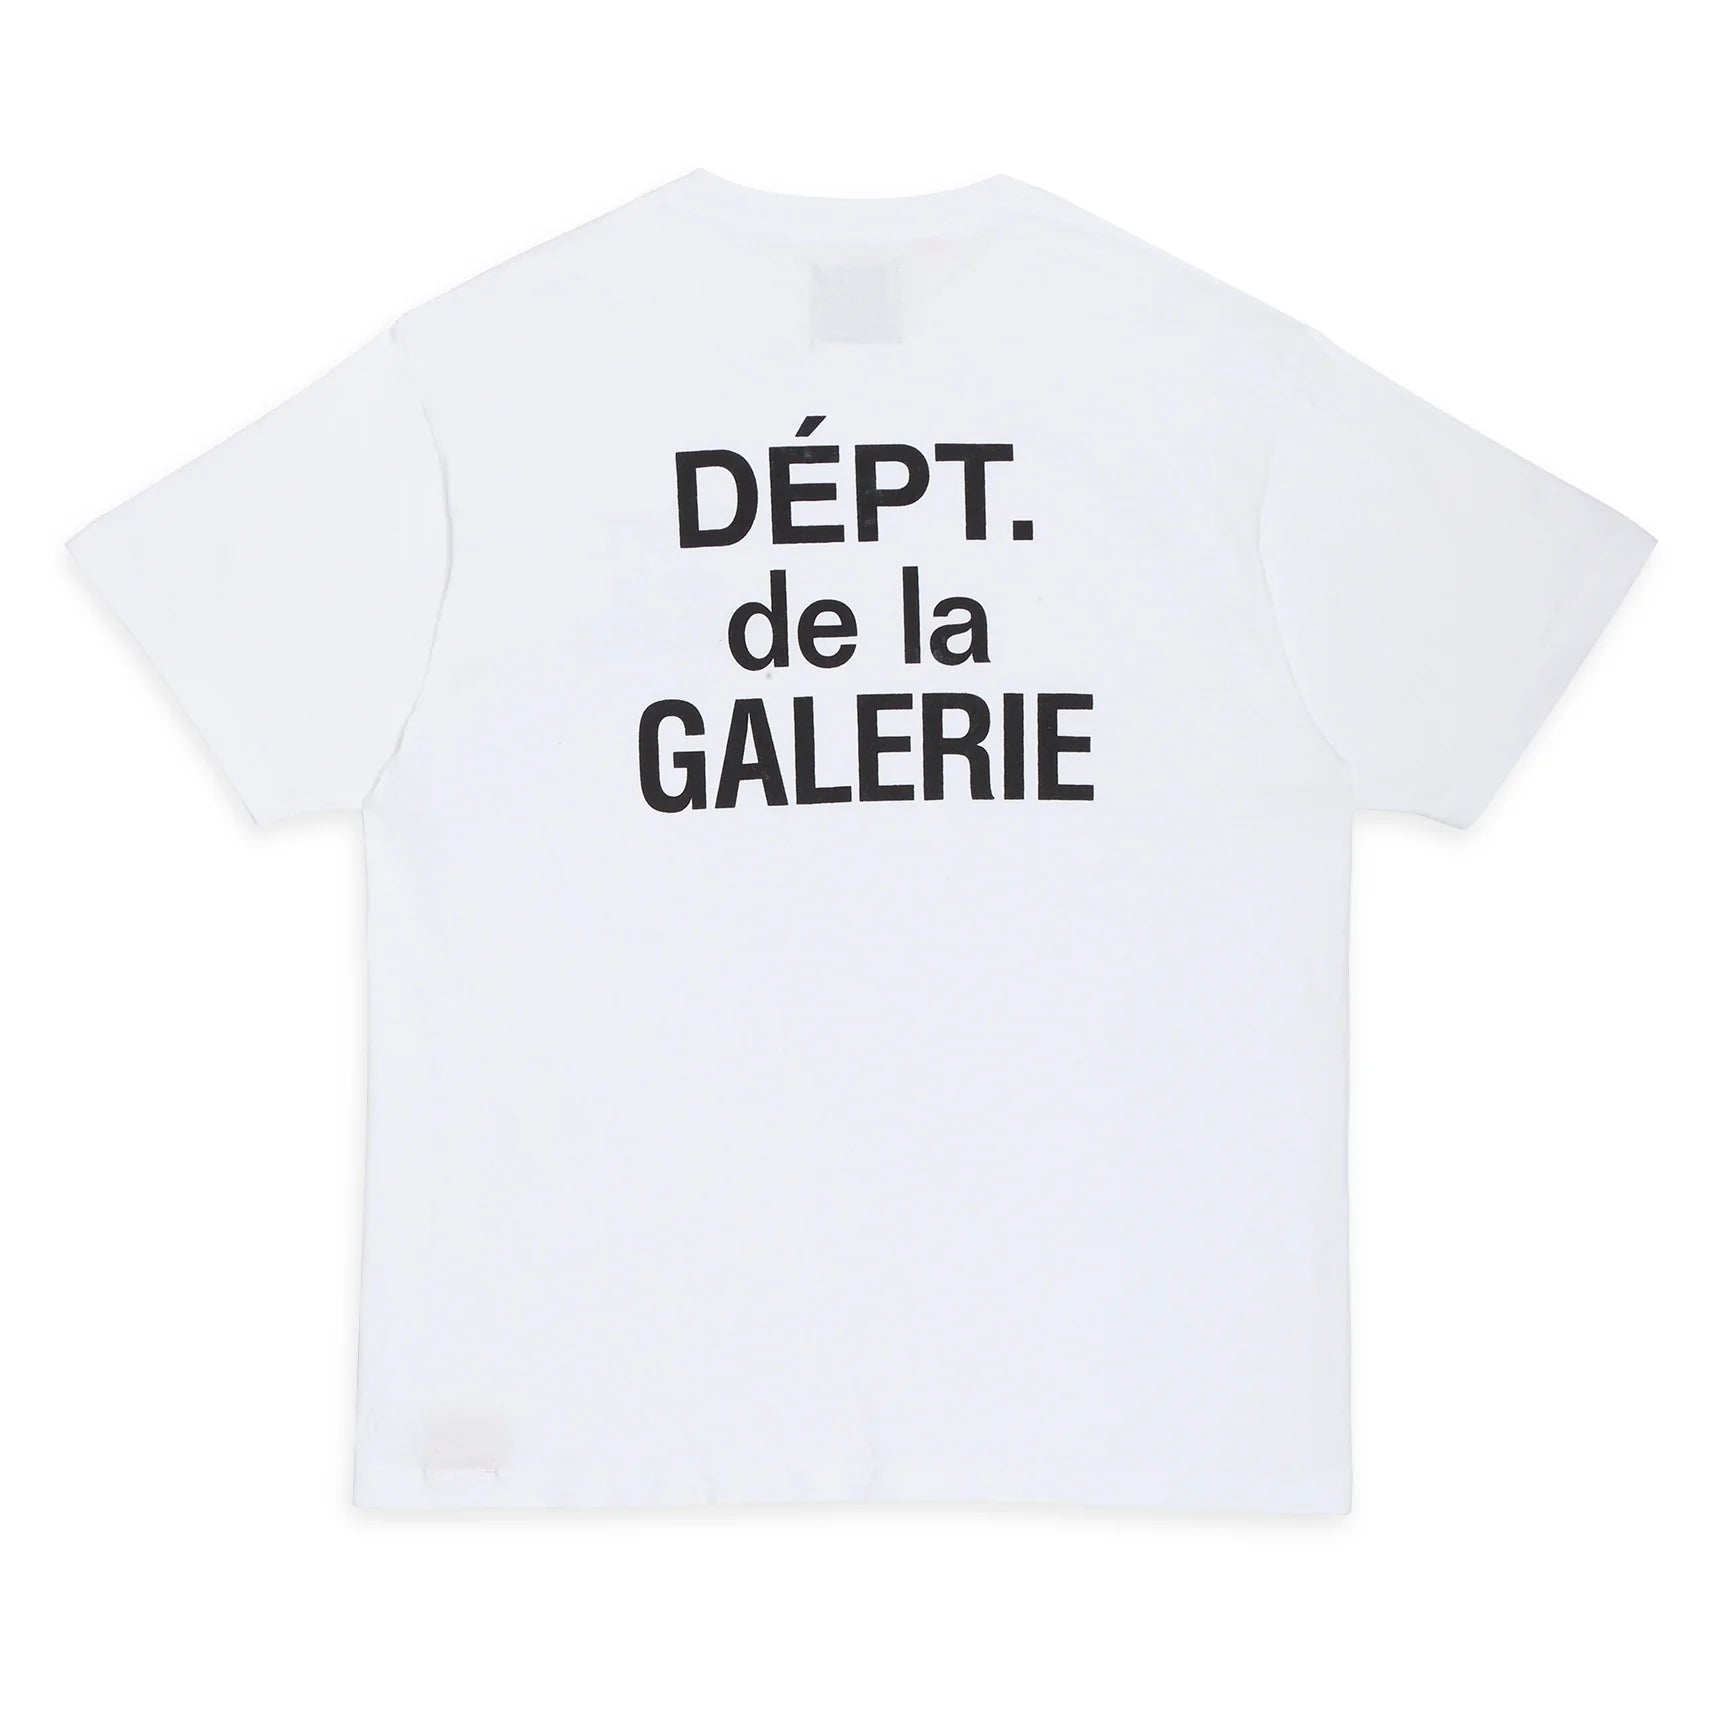 Gallery Dept. French T-Shirt White Black